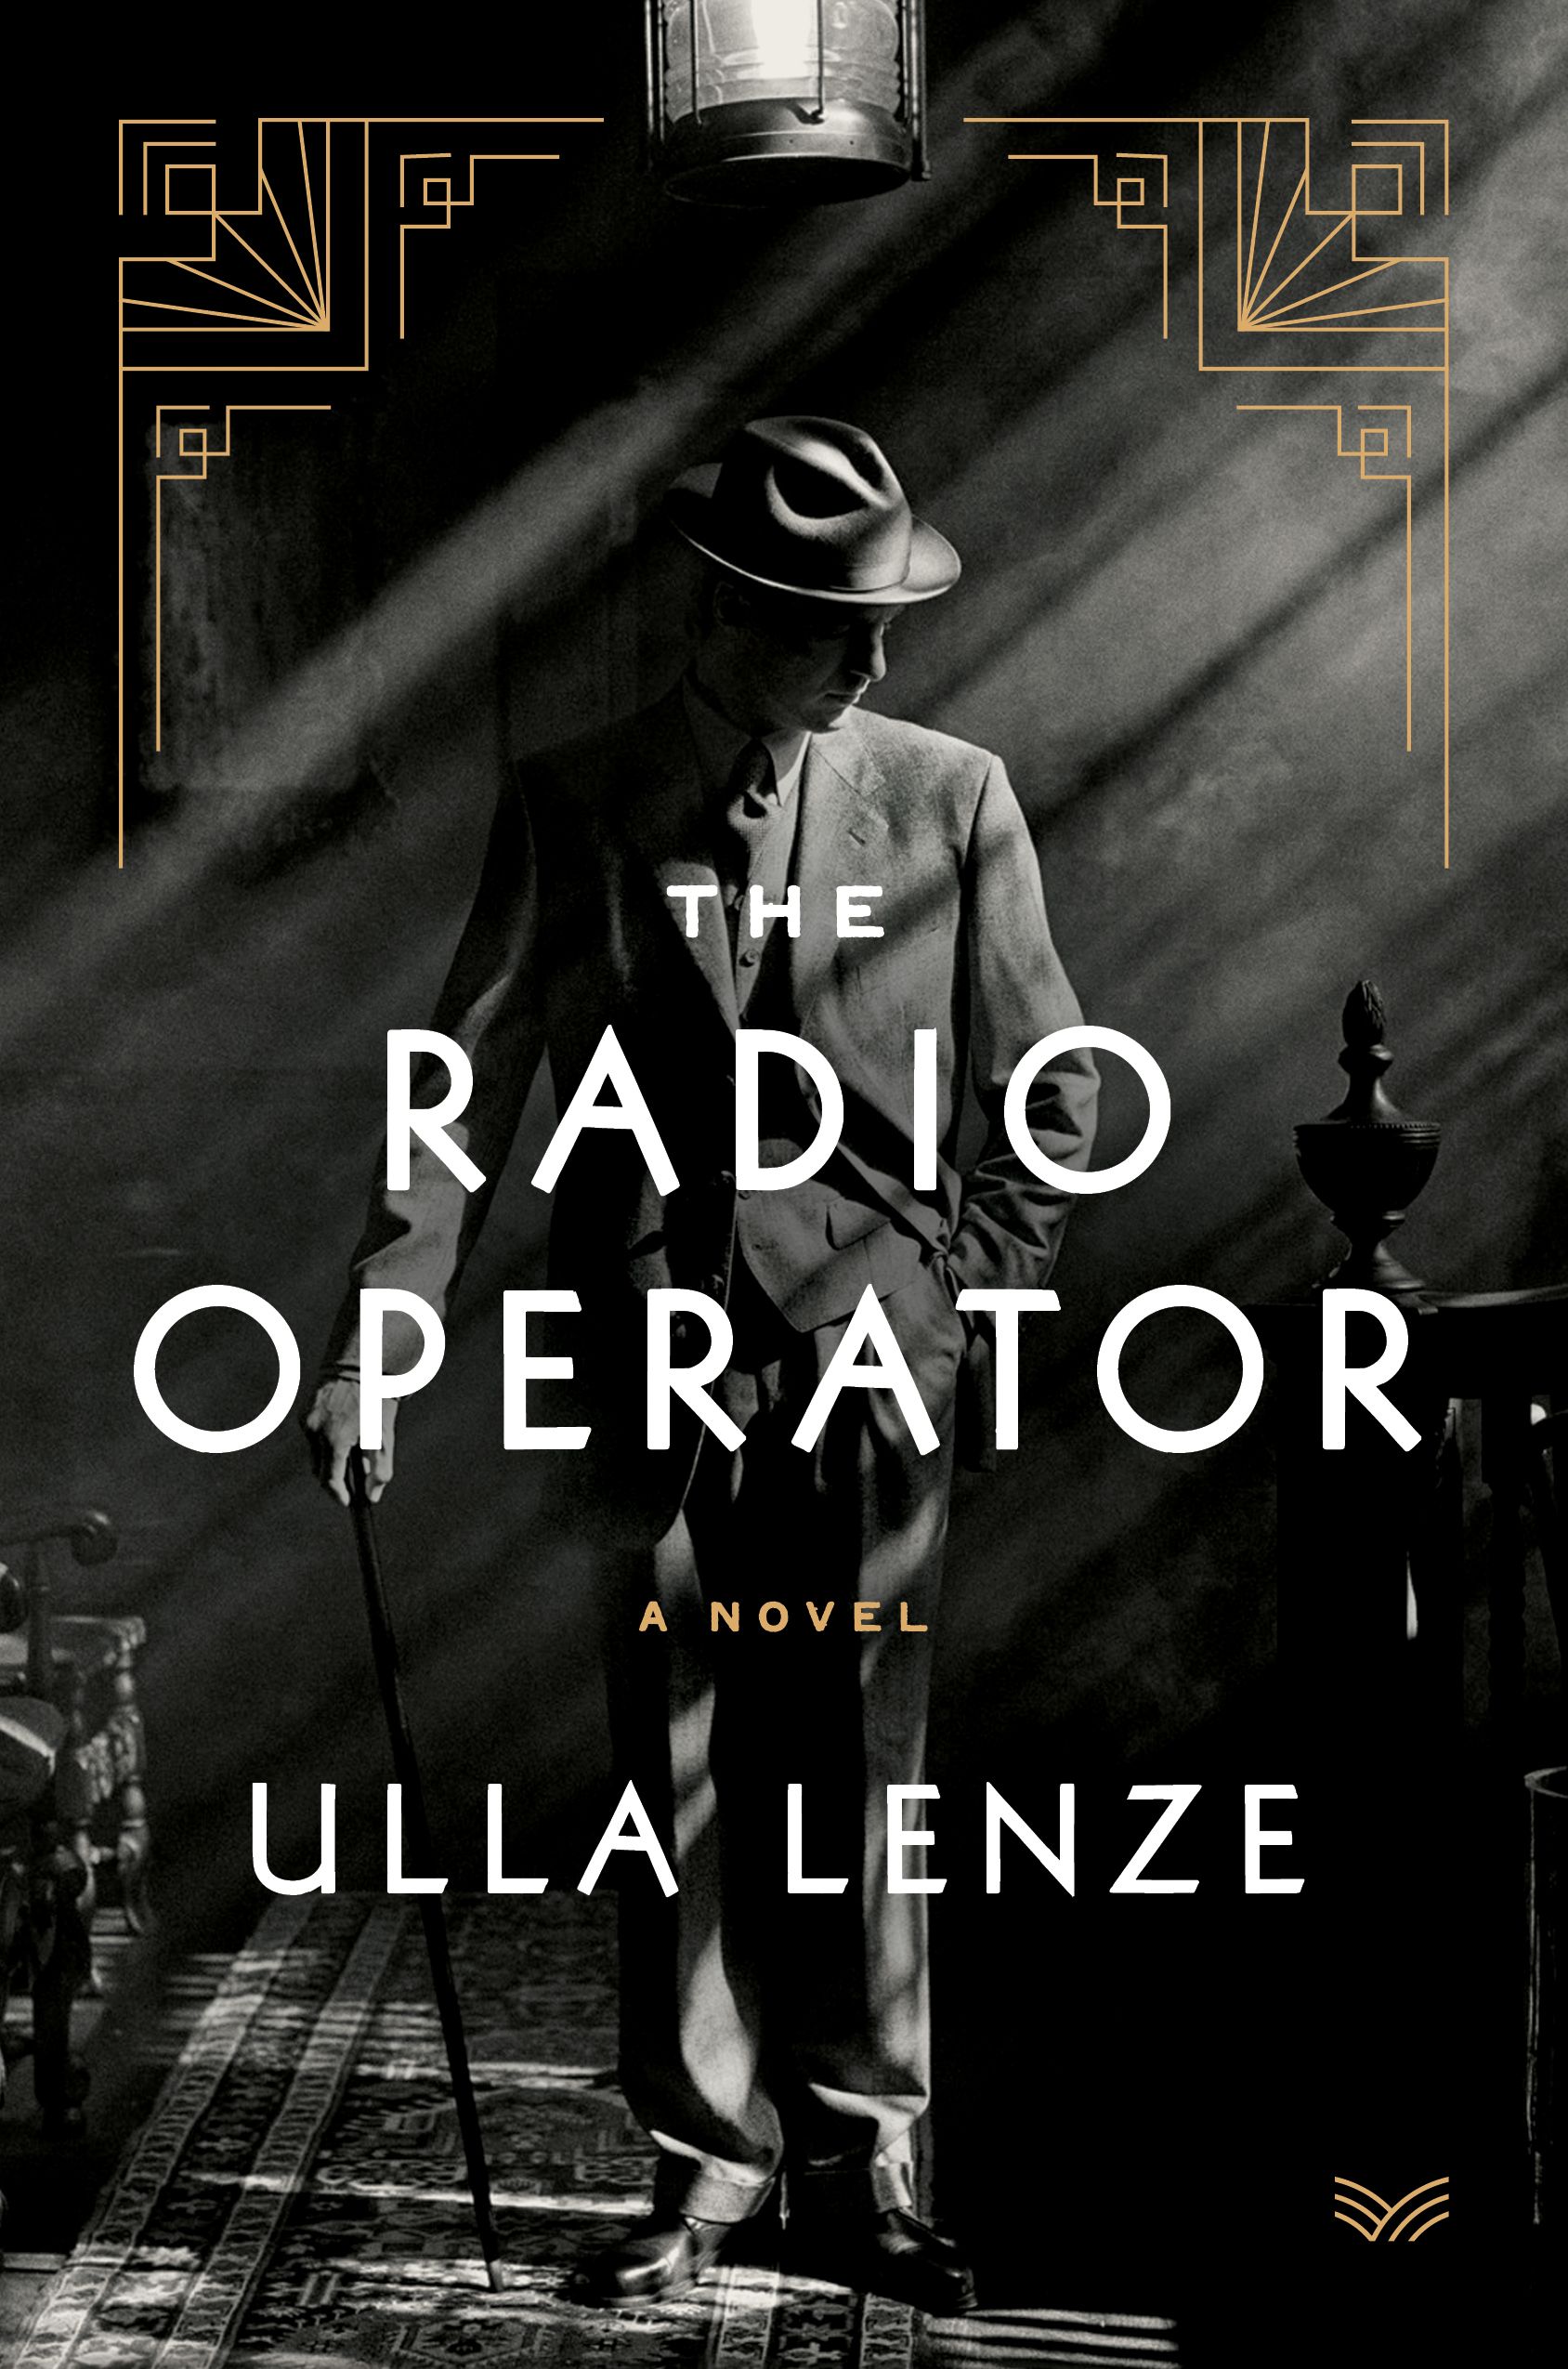 Book cover of "The Radio Operator"